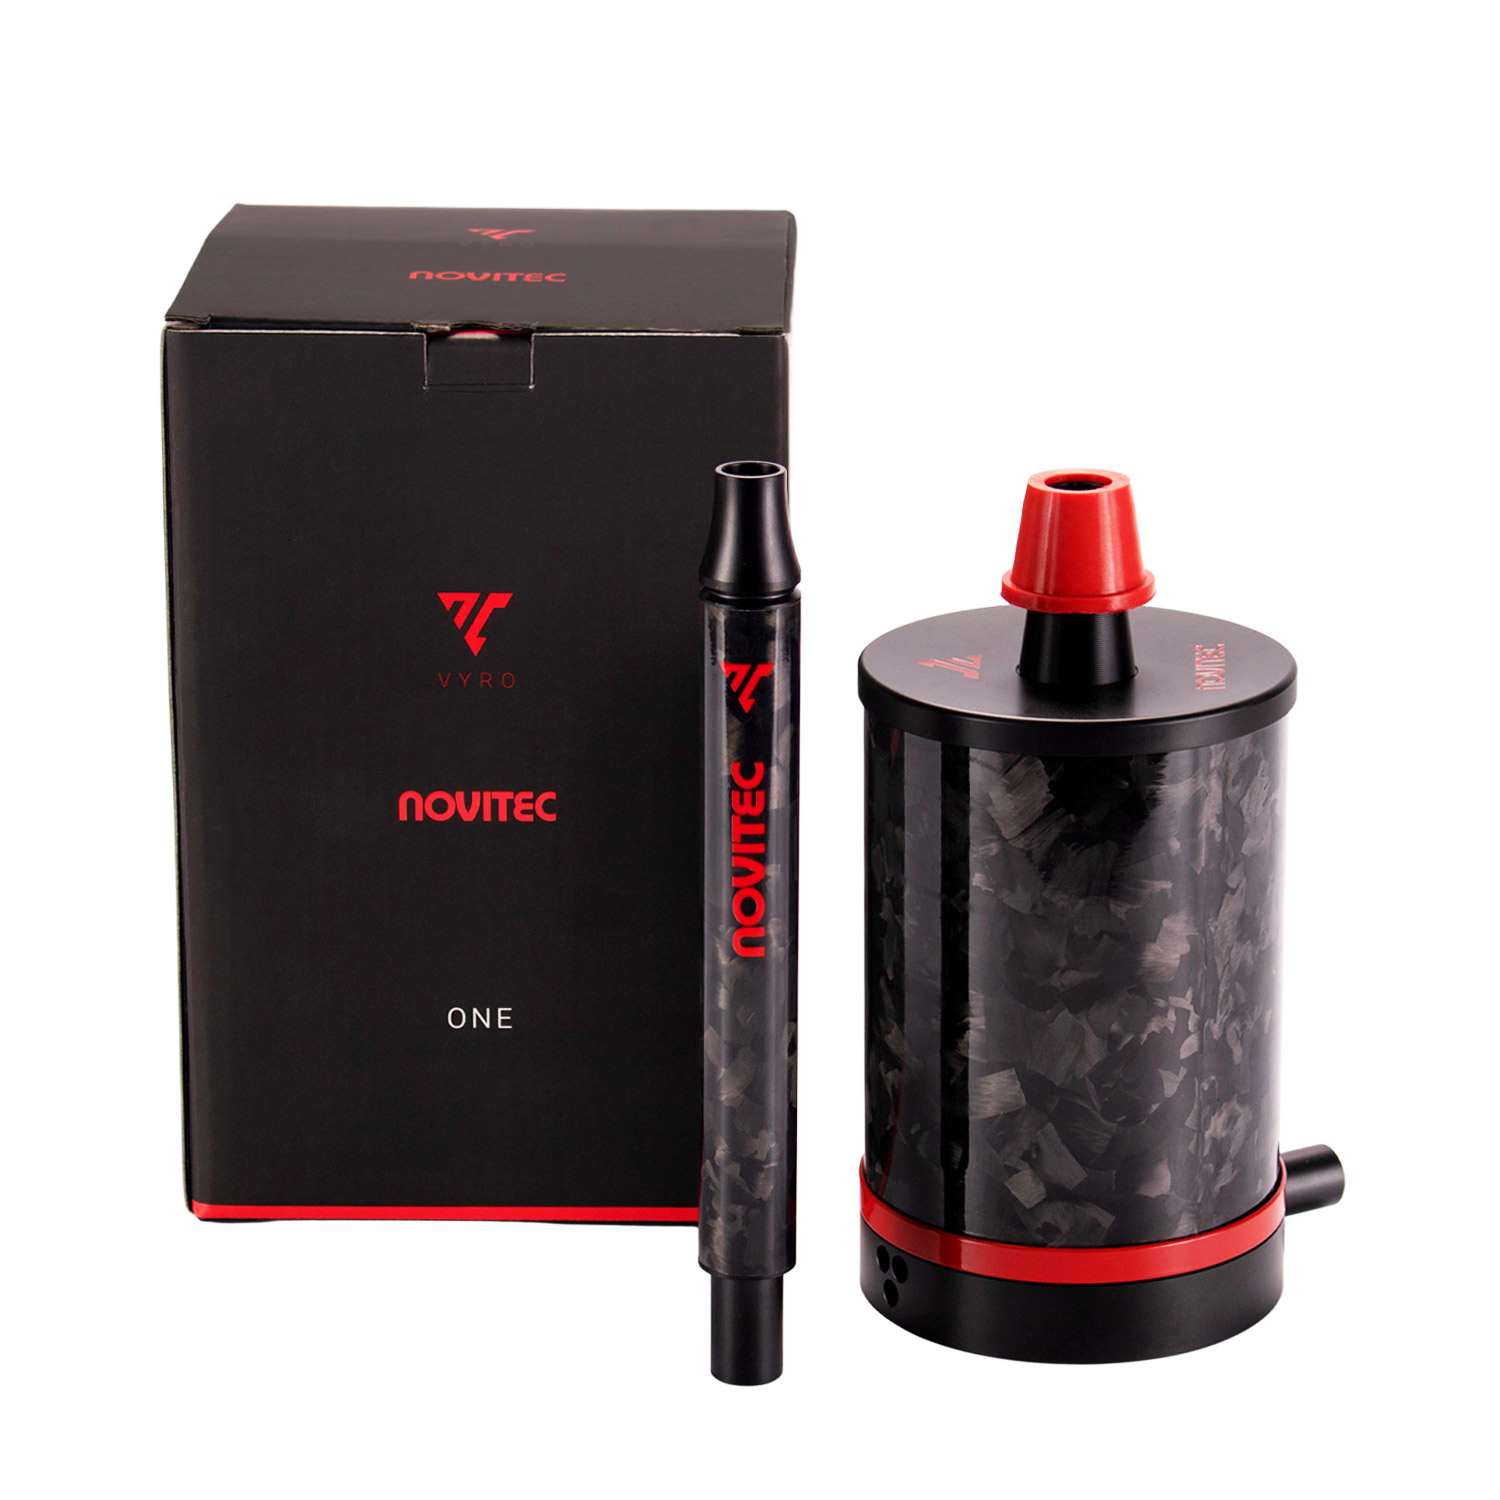 Vyro Novitec One Full Travel Set - Black and Red Limited Edition